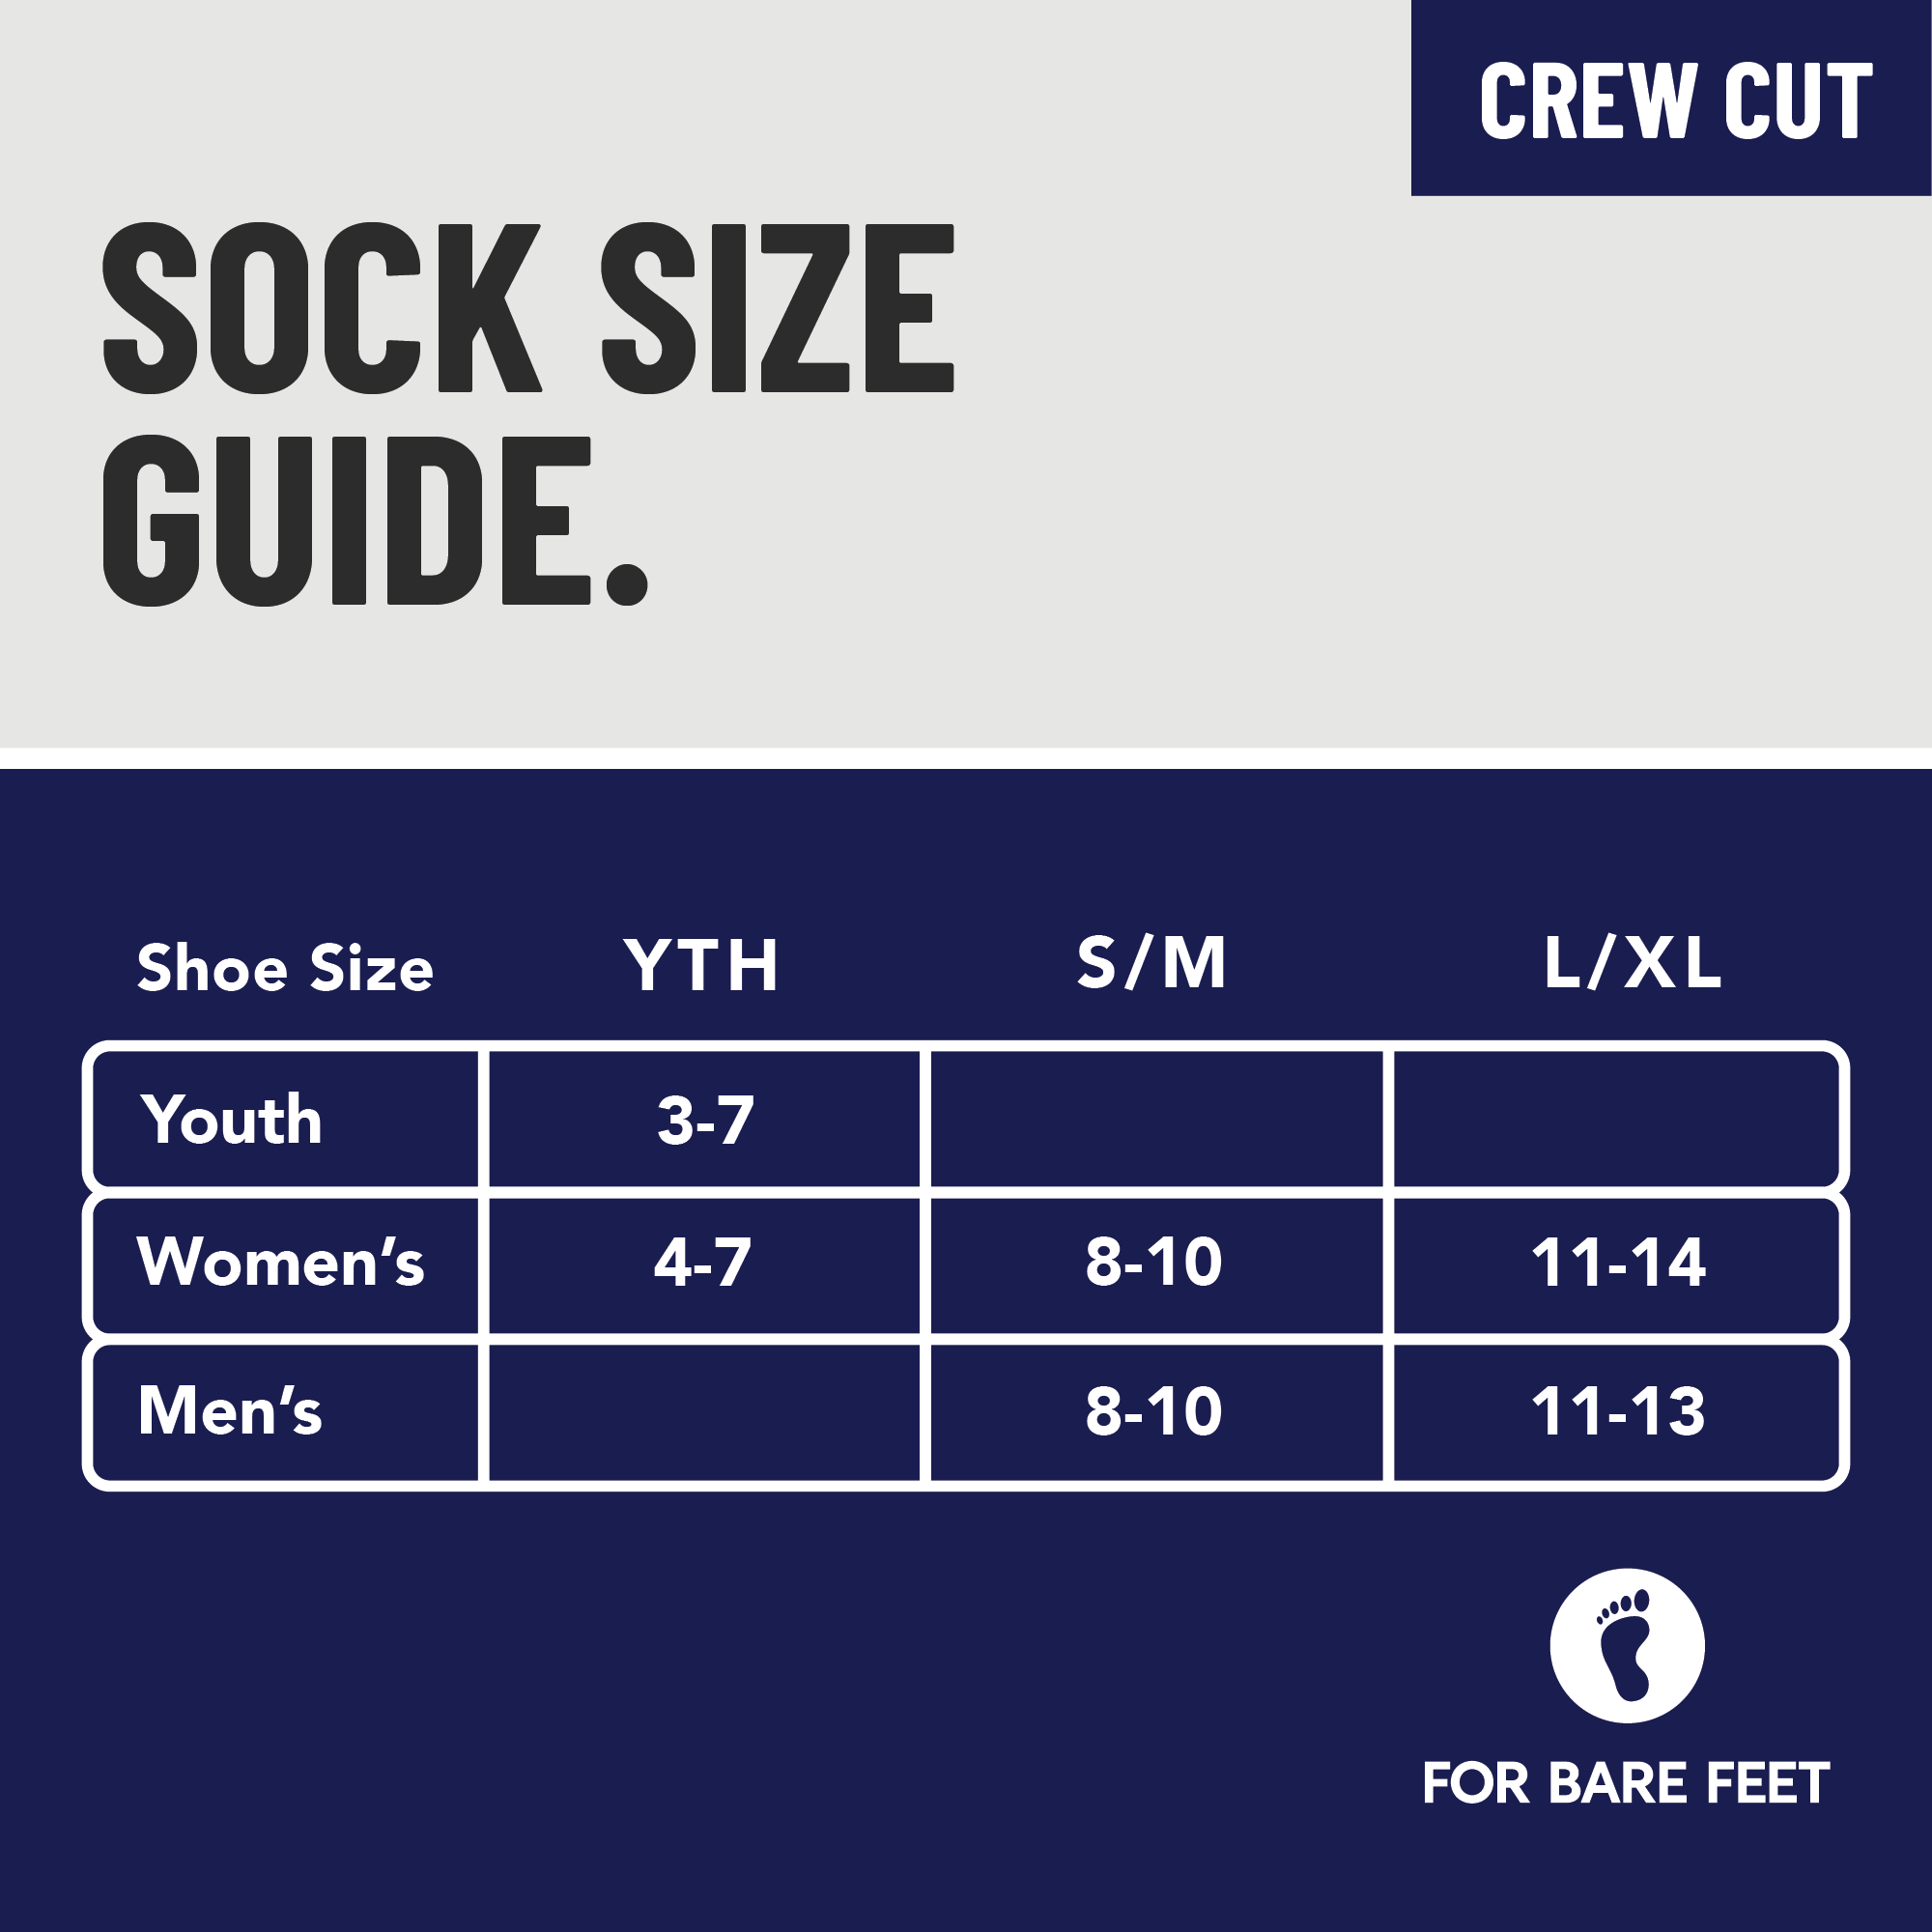 Ohio State Buckeyes Breakout Premium Crew Socks